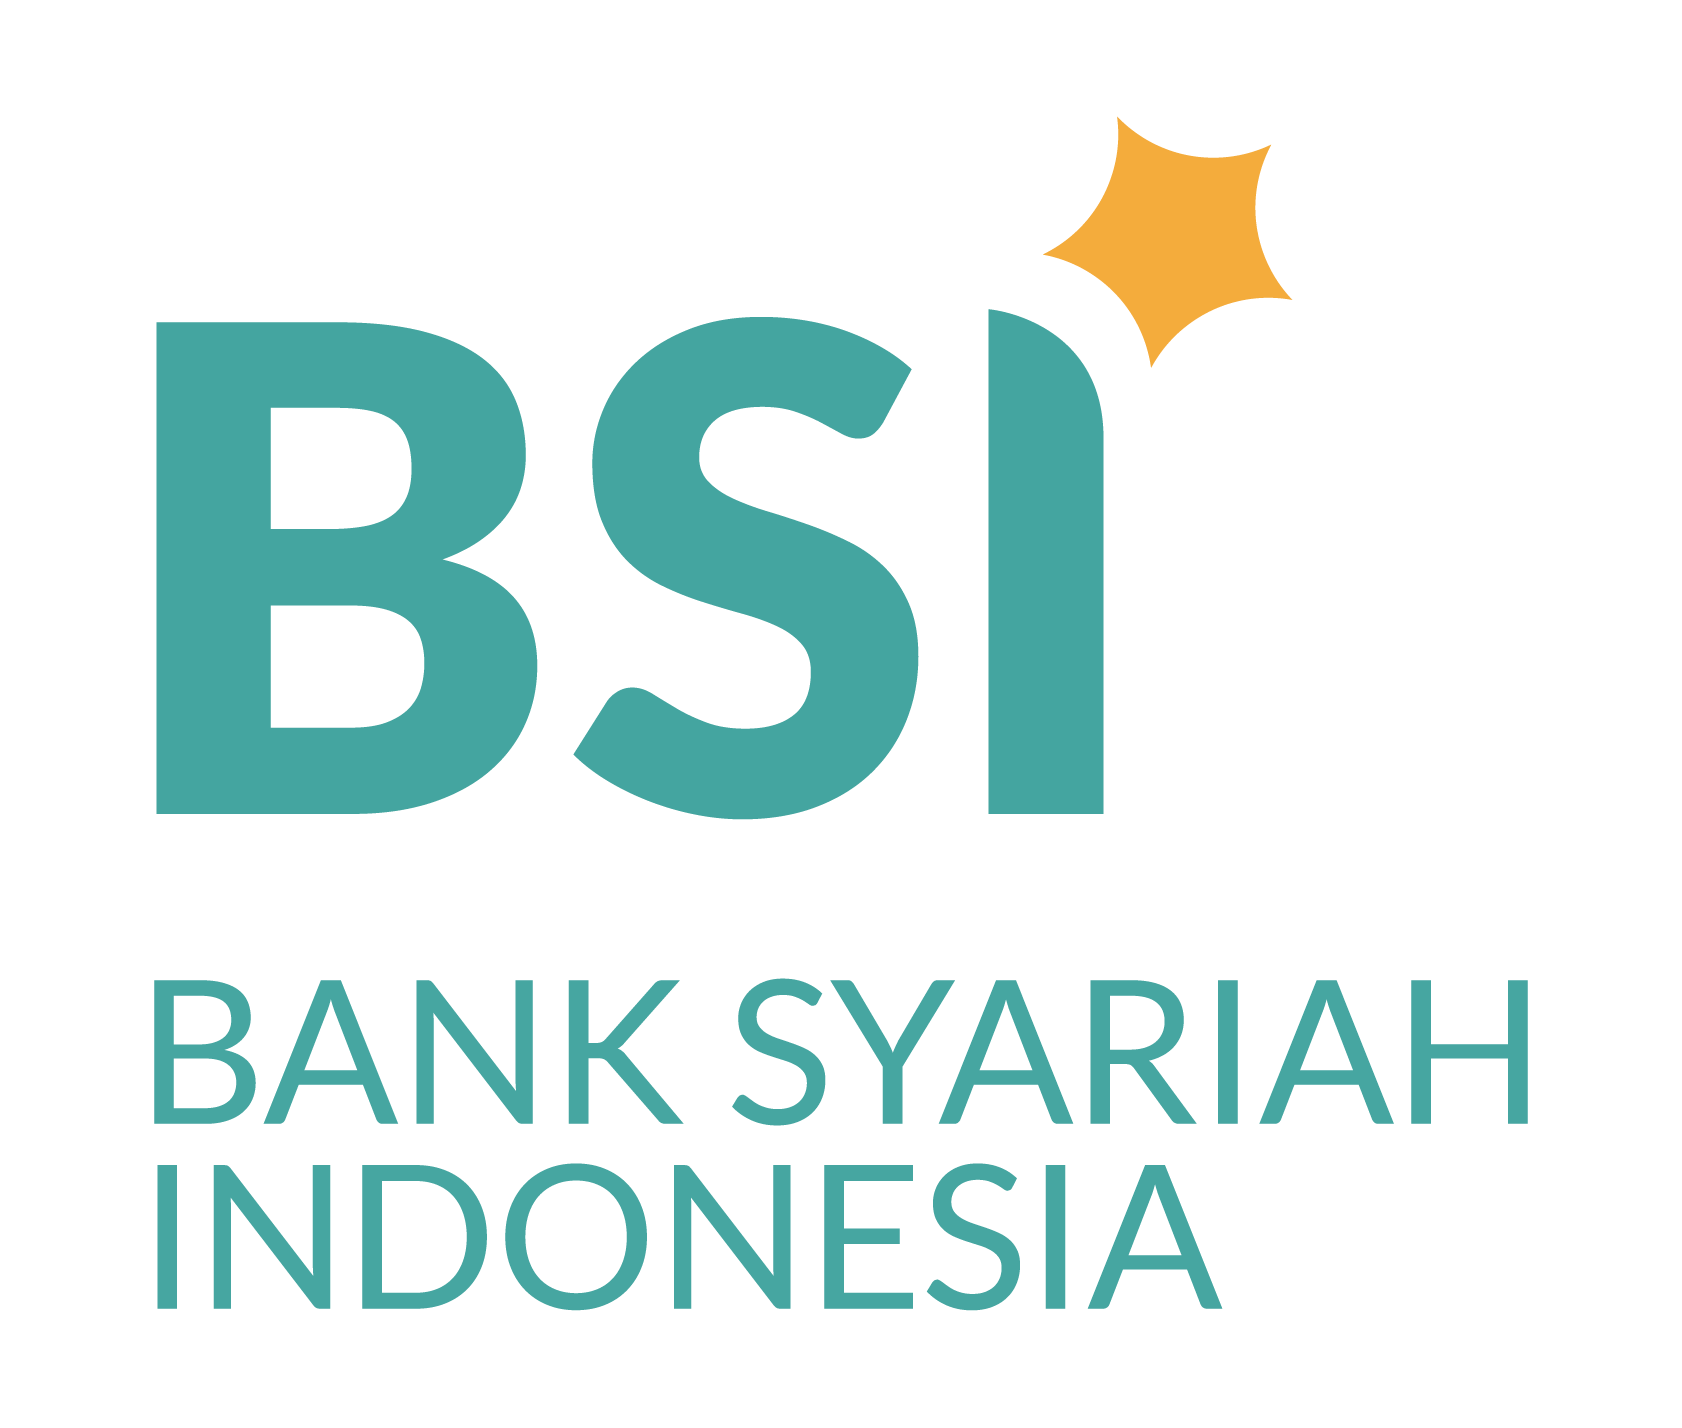 BSI (Bank Syariah Indonesia) Logo